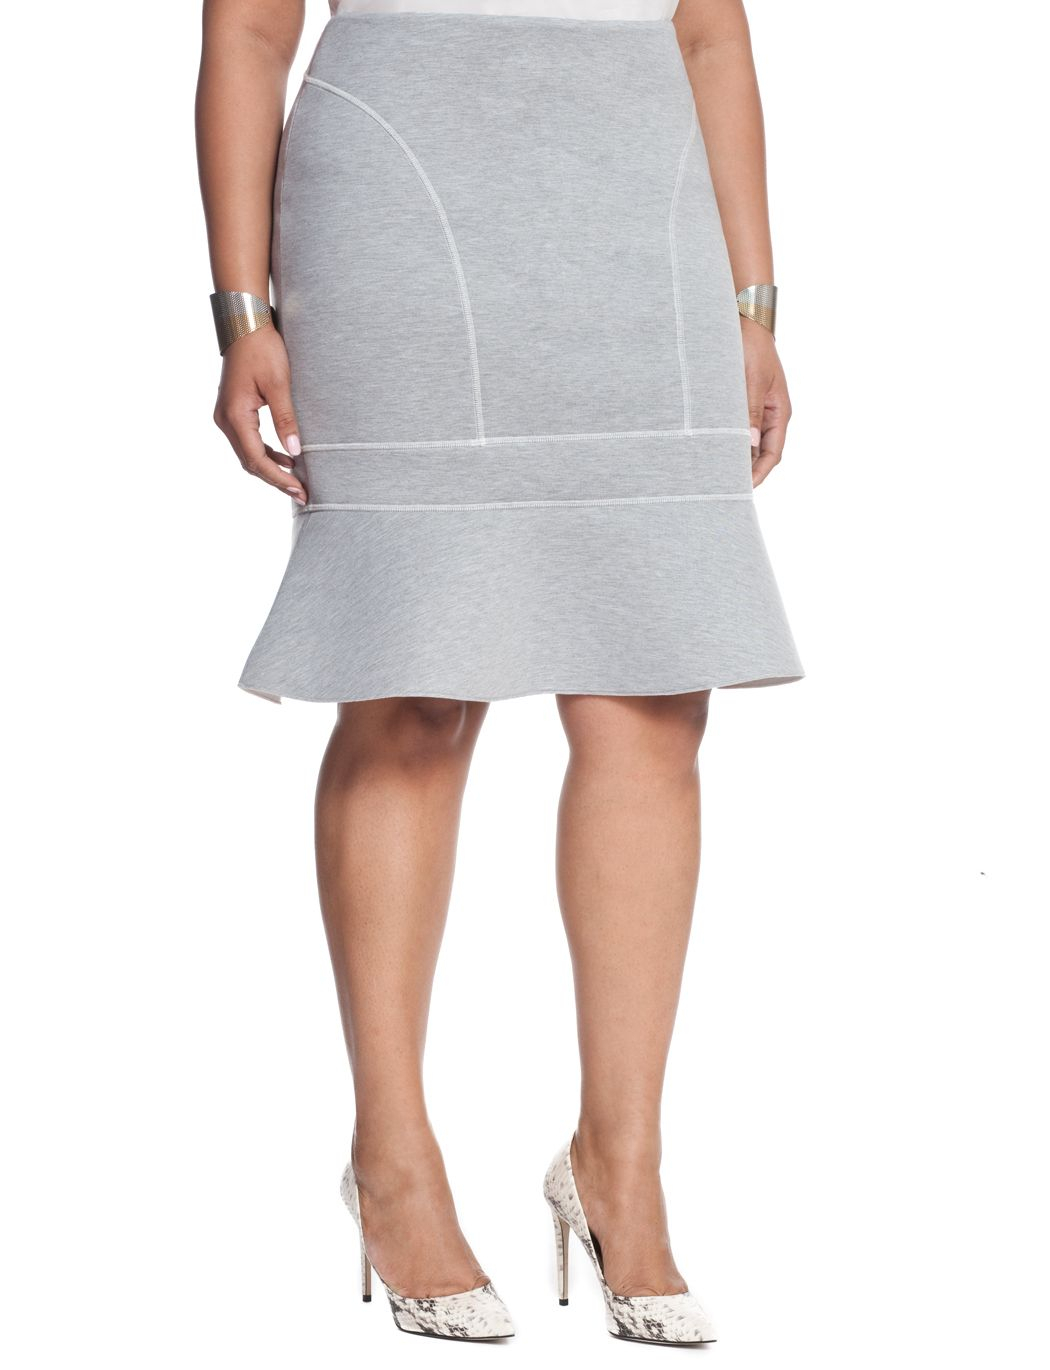 Stitched Skater Skirt | Women'S Plus Size Skirts | Eloquii tout Plus Size Skater Skirt